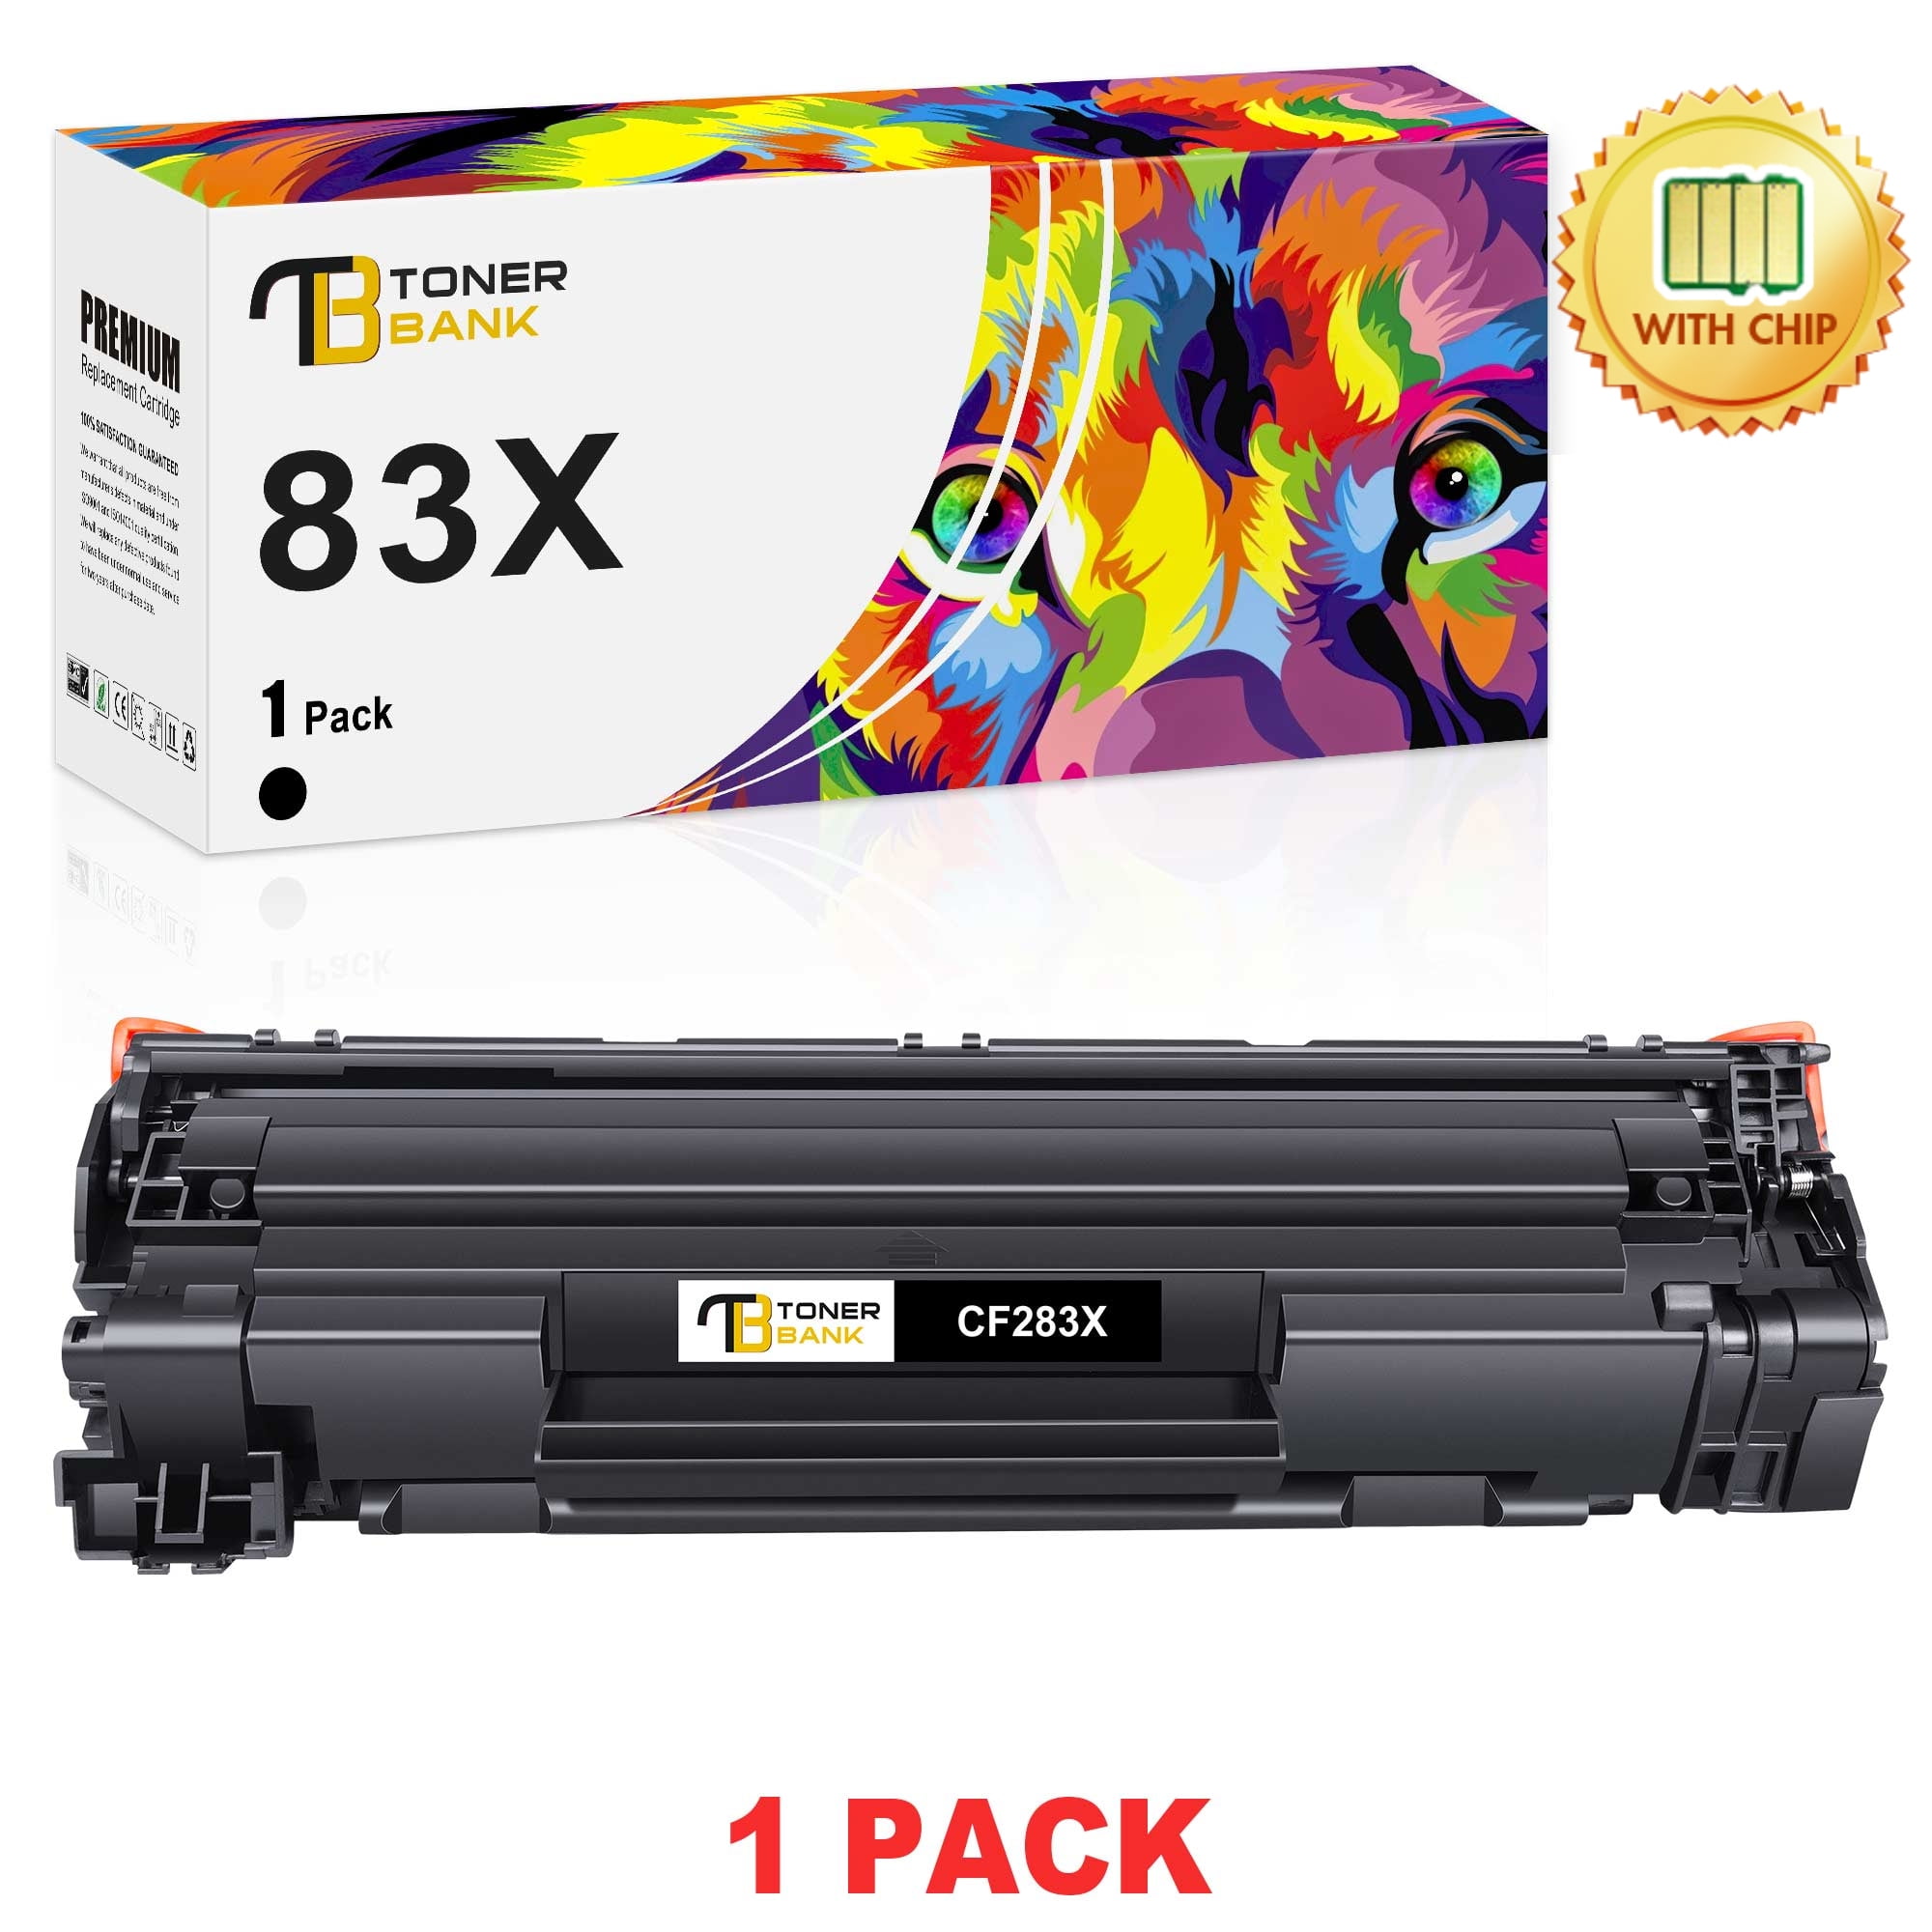 Toner Bank 1-Pack Compatible Toner for HP CE410X LaserJet Pro 400 Color M451dw 451nw M475dn Pro 300 Color MFP M375nw M351 Printer Ink Black - Walmart.com